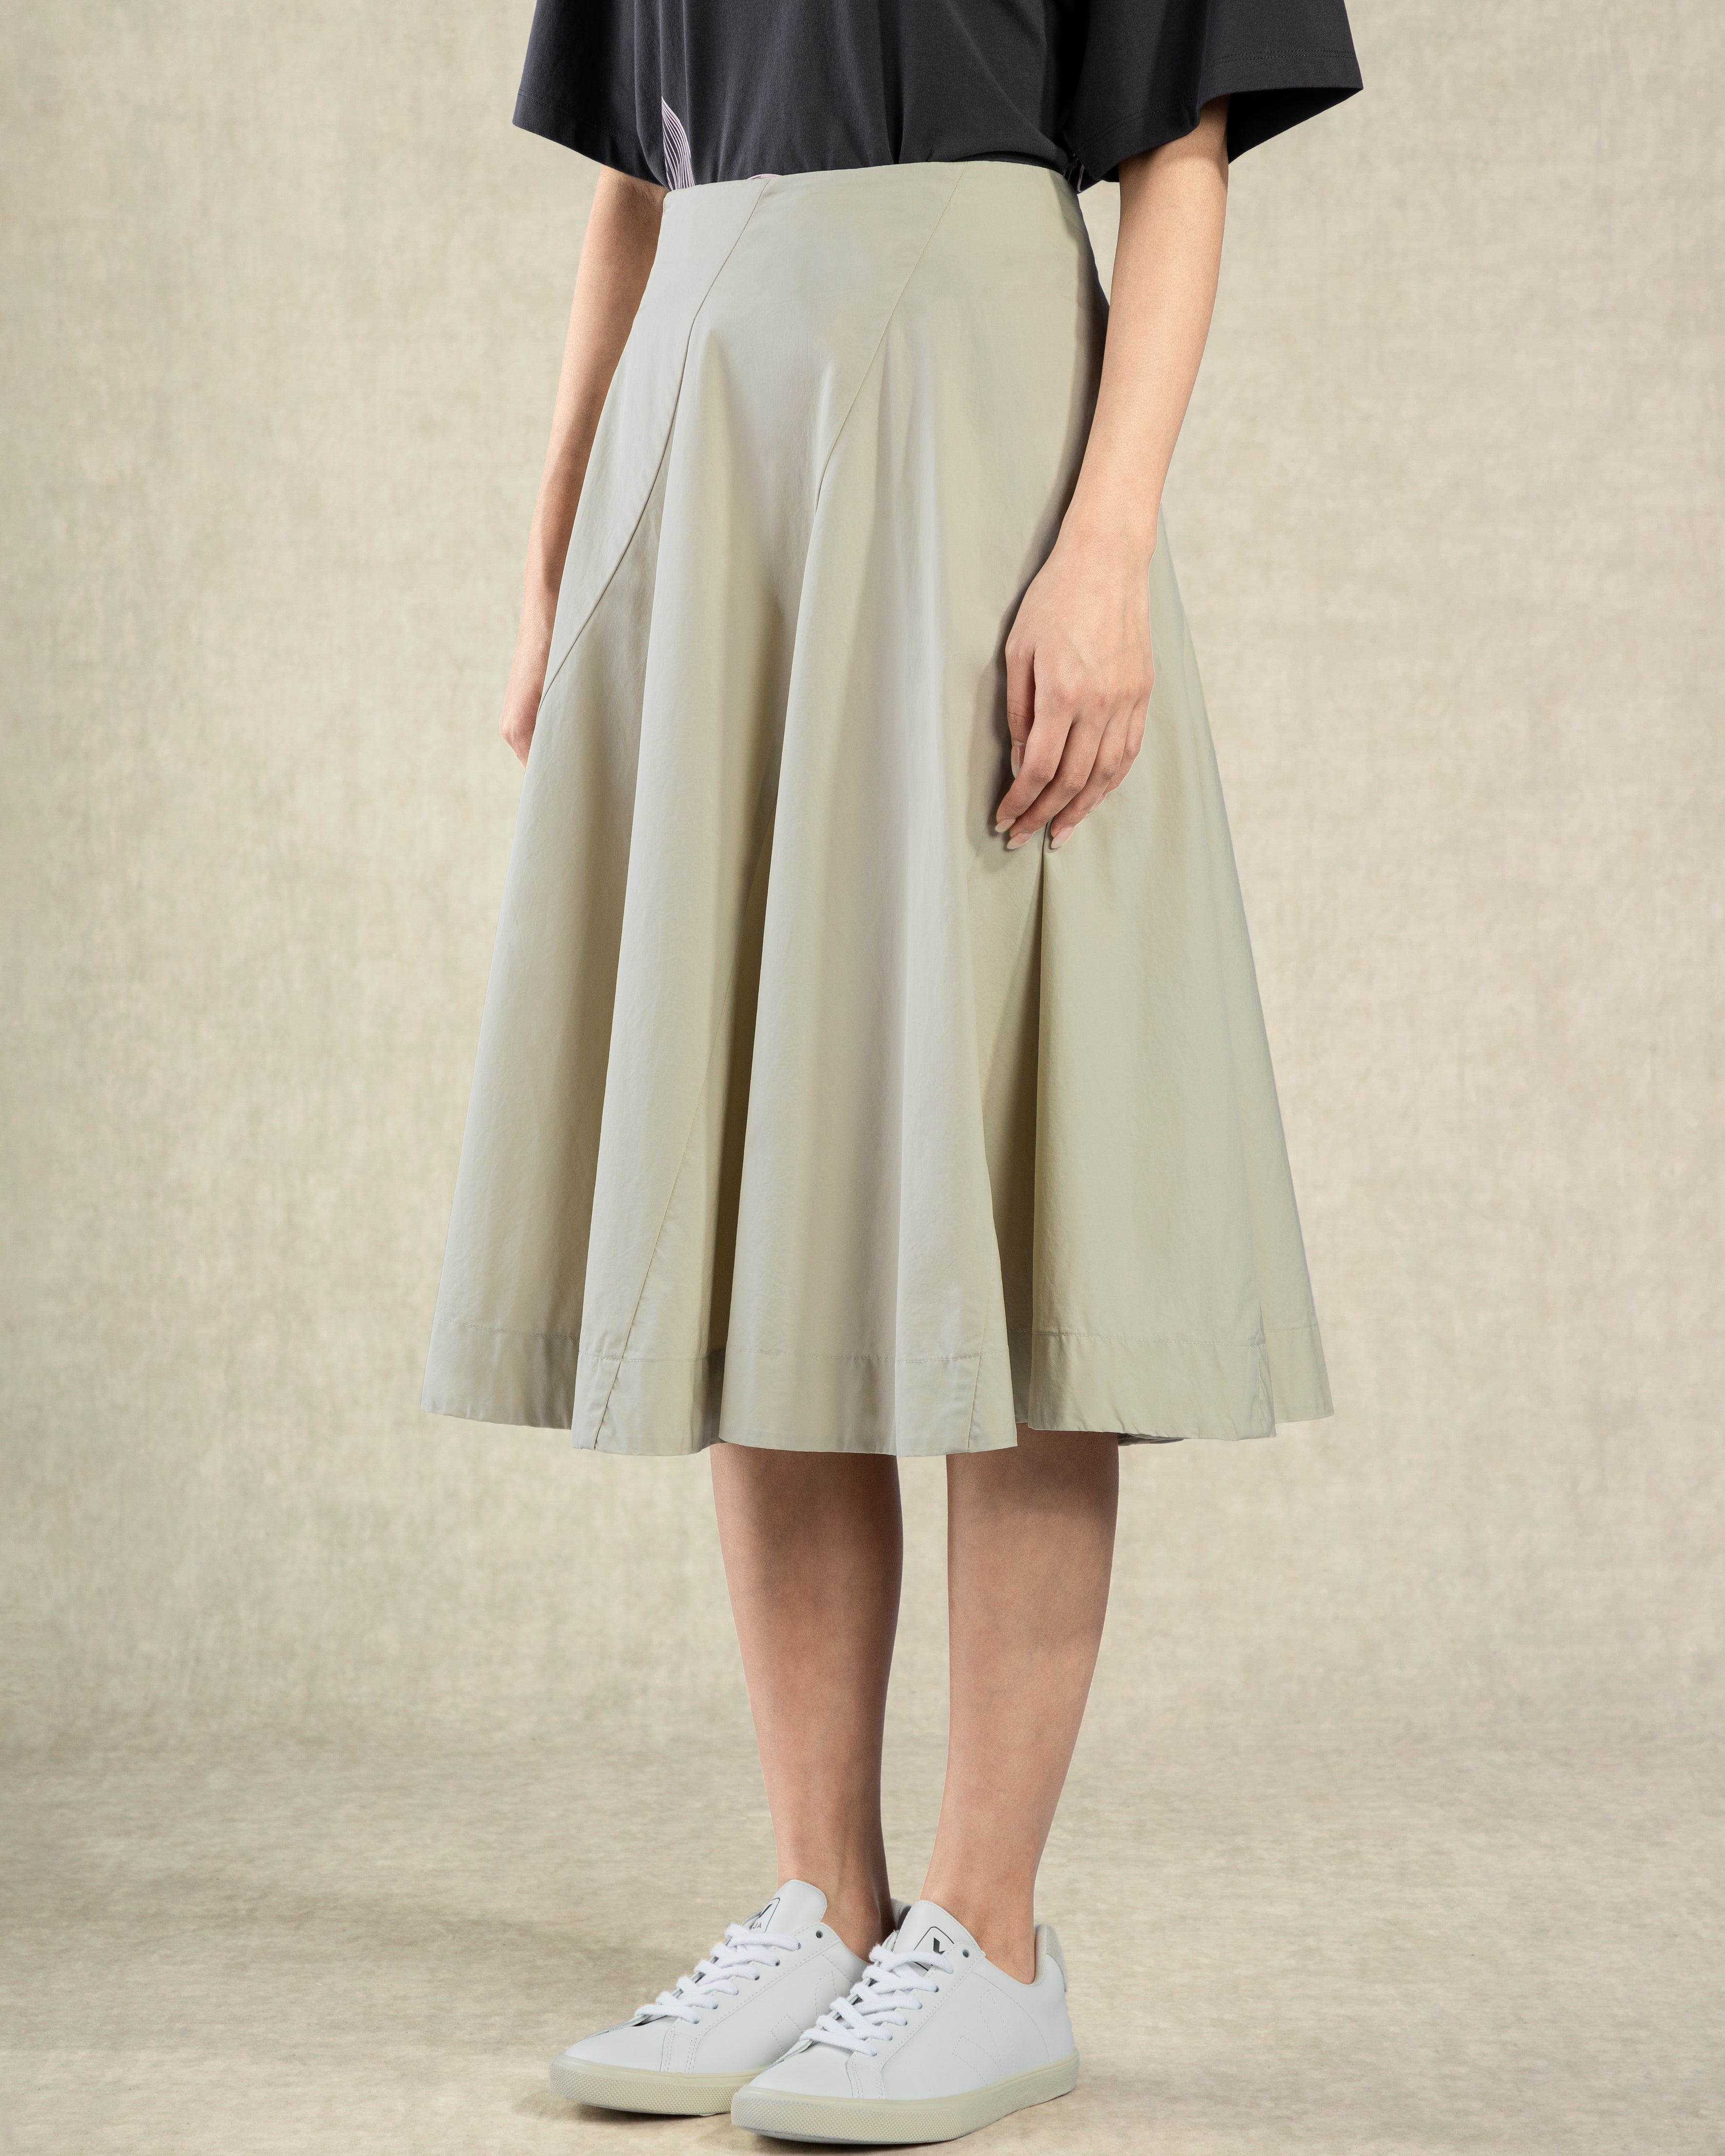 Pumice Stone Spiral Skirt Womens Mid Length Skirt